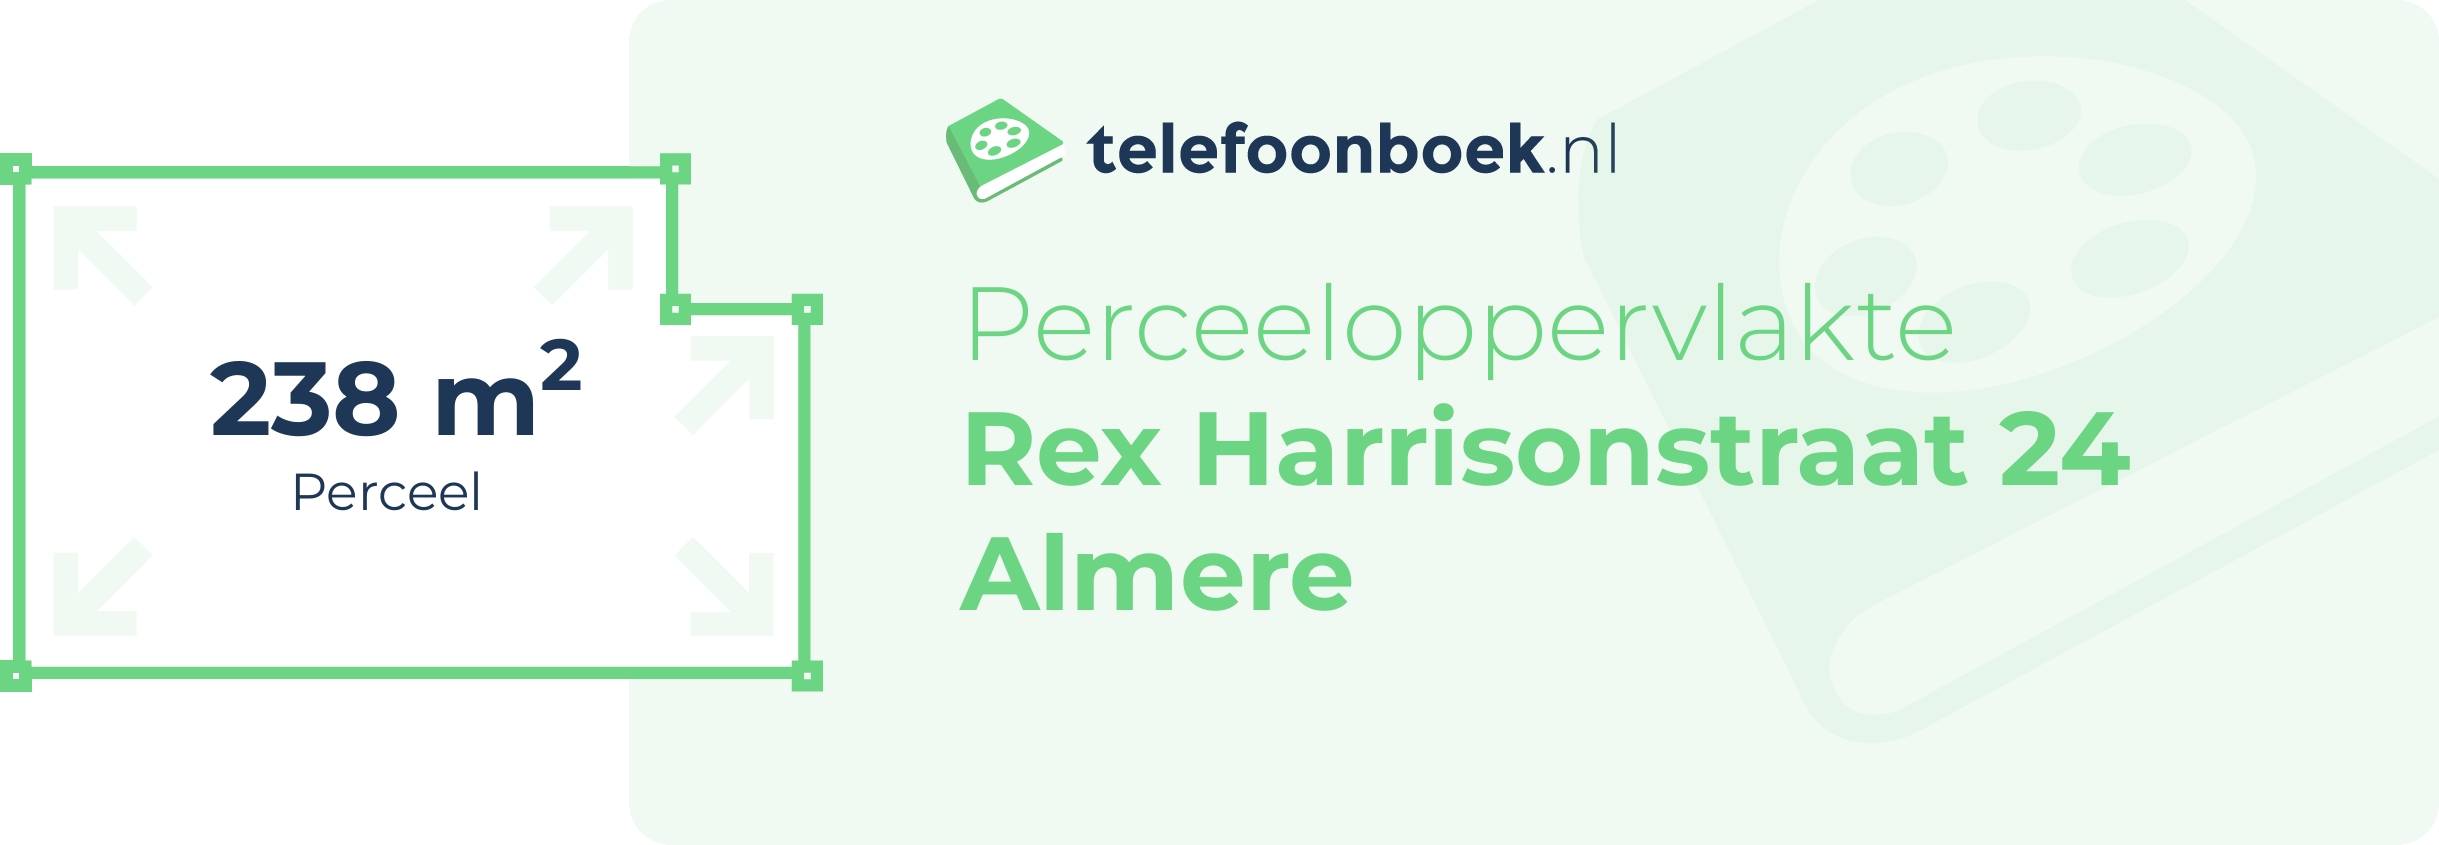 Perceeloppervlakte Rex Harrisonstraat 24 Almere